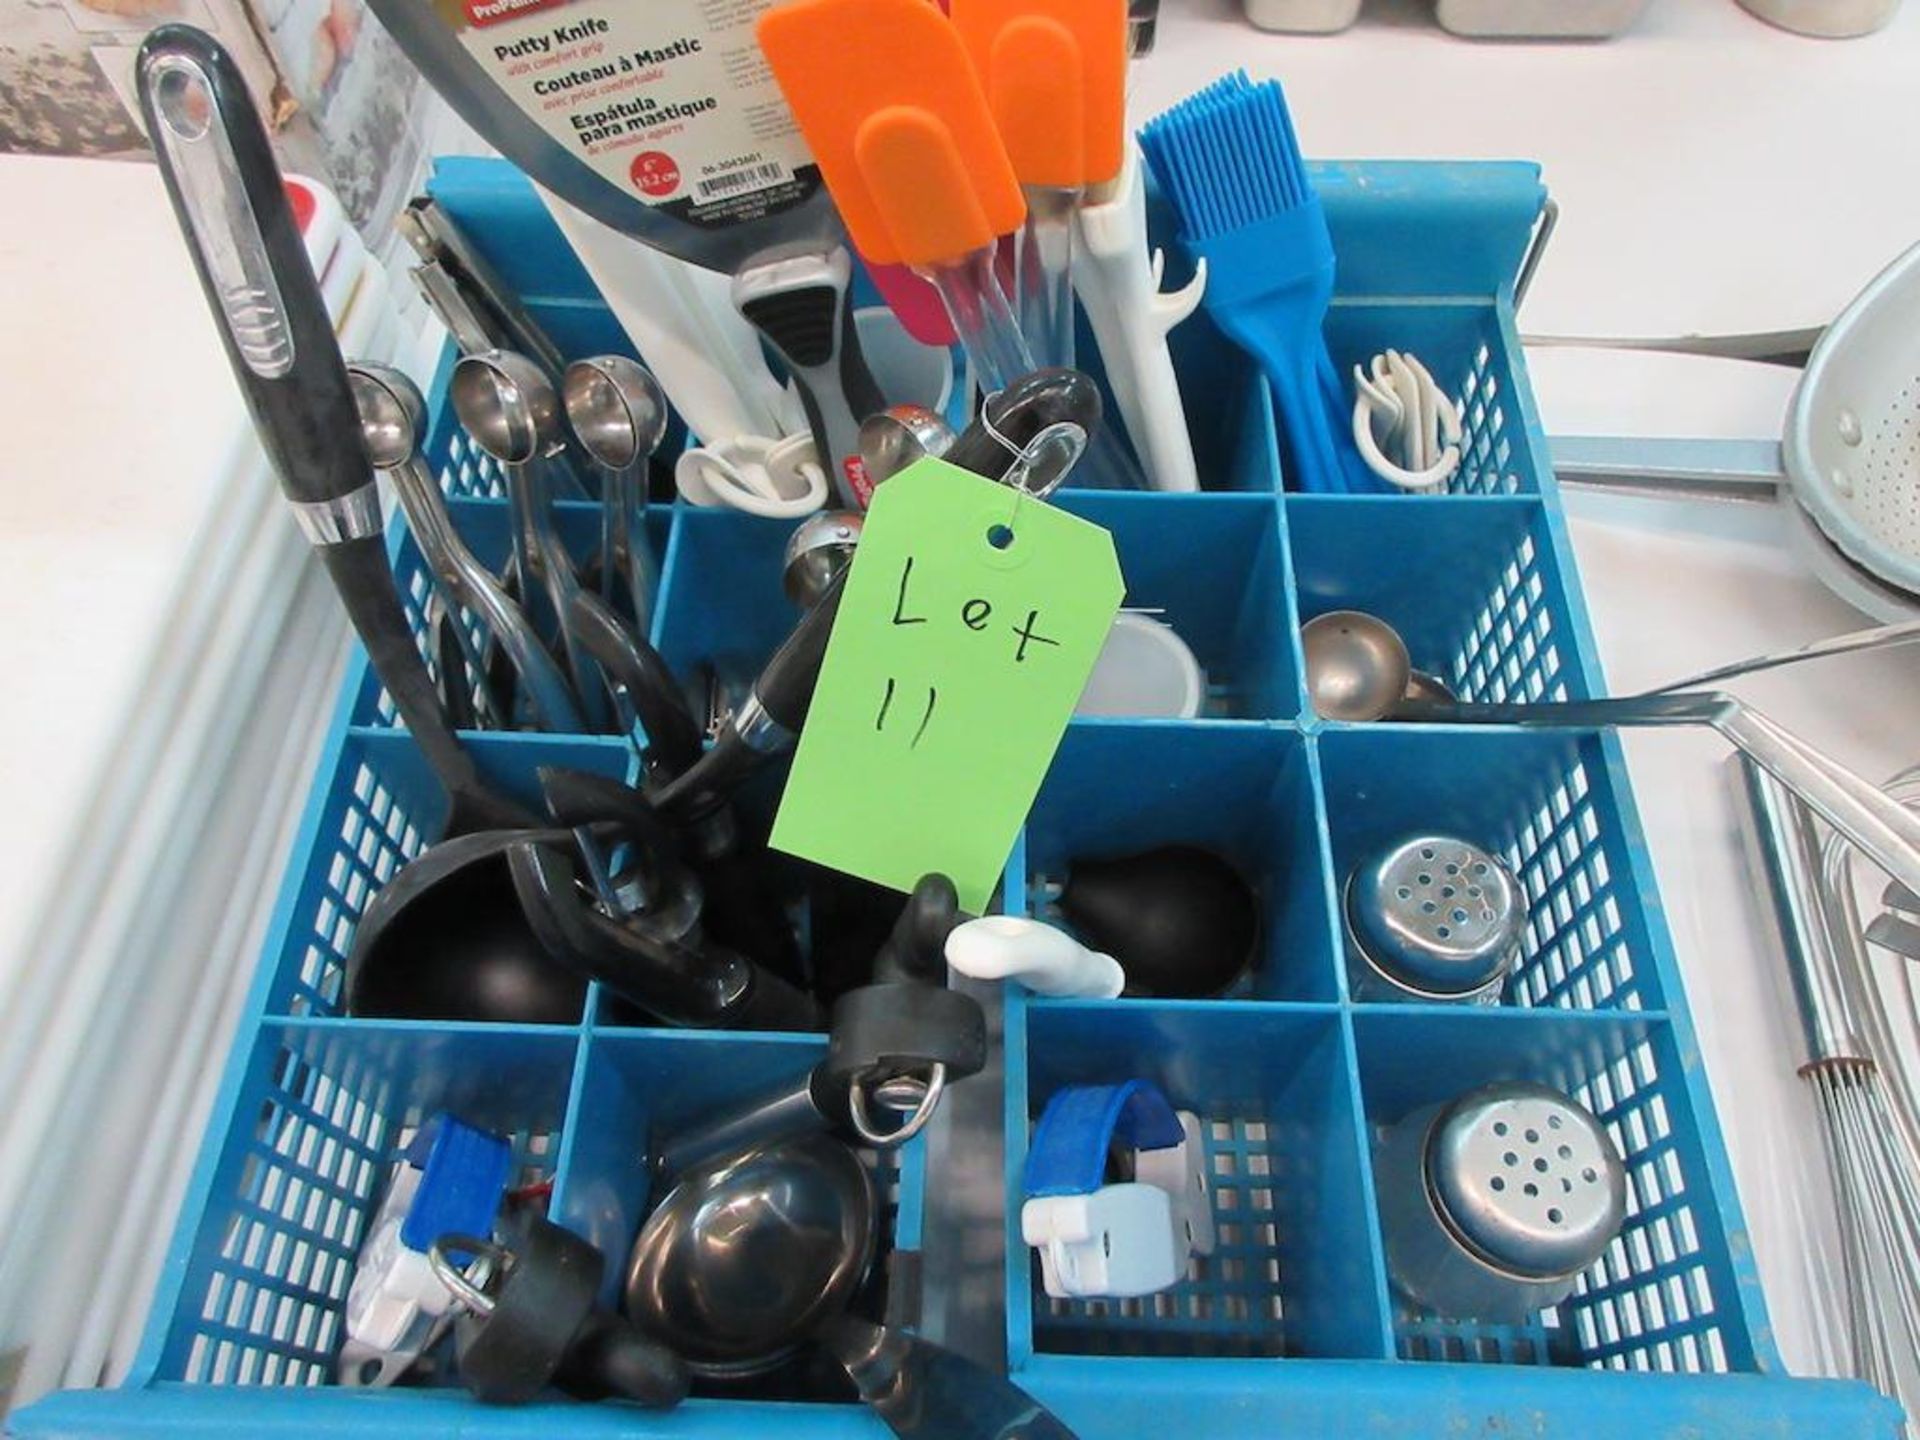 Lot kitchen utensils, whisks, Edlund knife holders etc. - Image 5 of 5